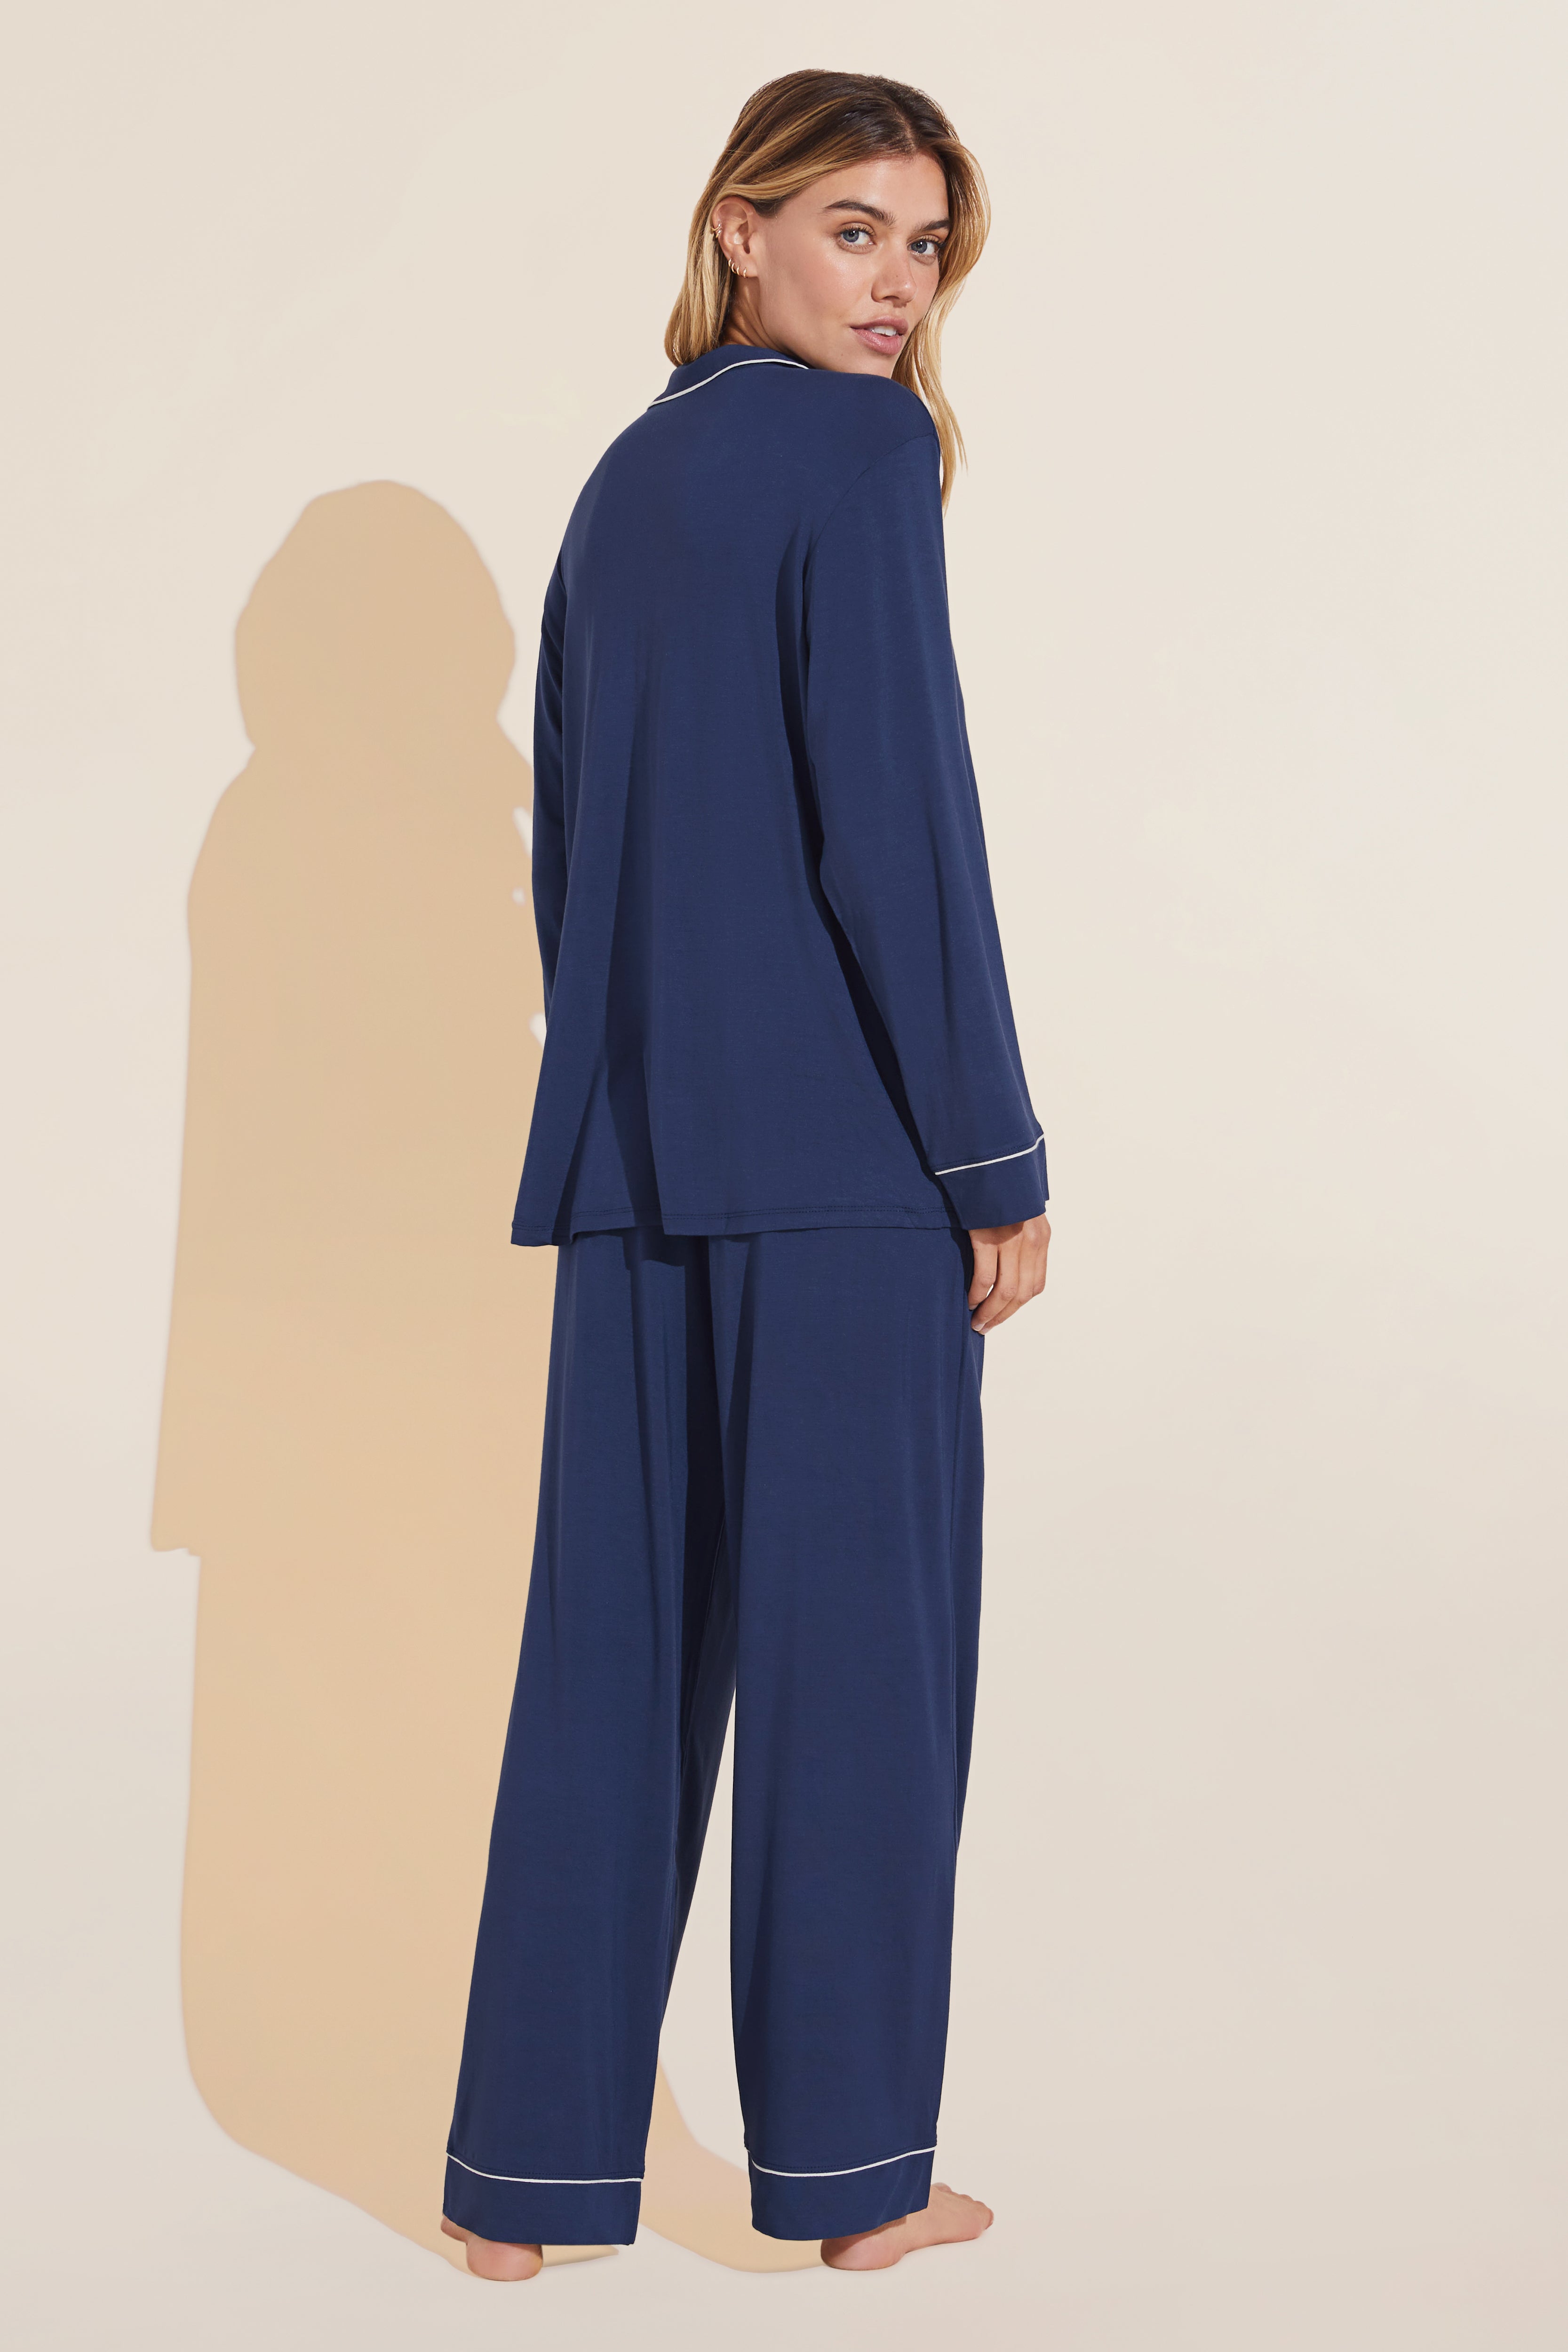 EBERJEY + NET SUSTAIN Gisele piped stretch-TENCEL™ Modal pajama set